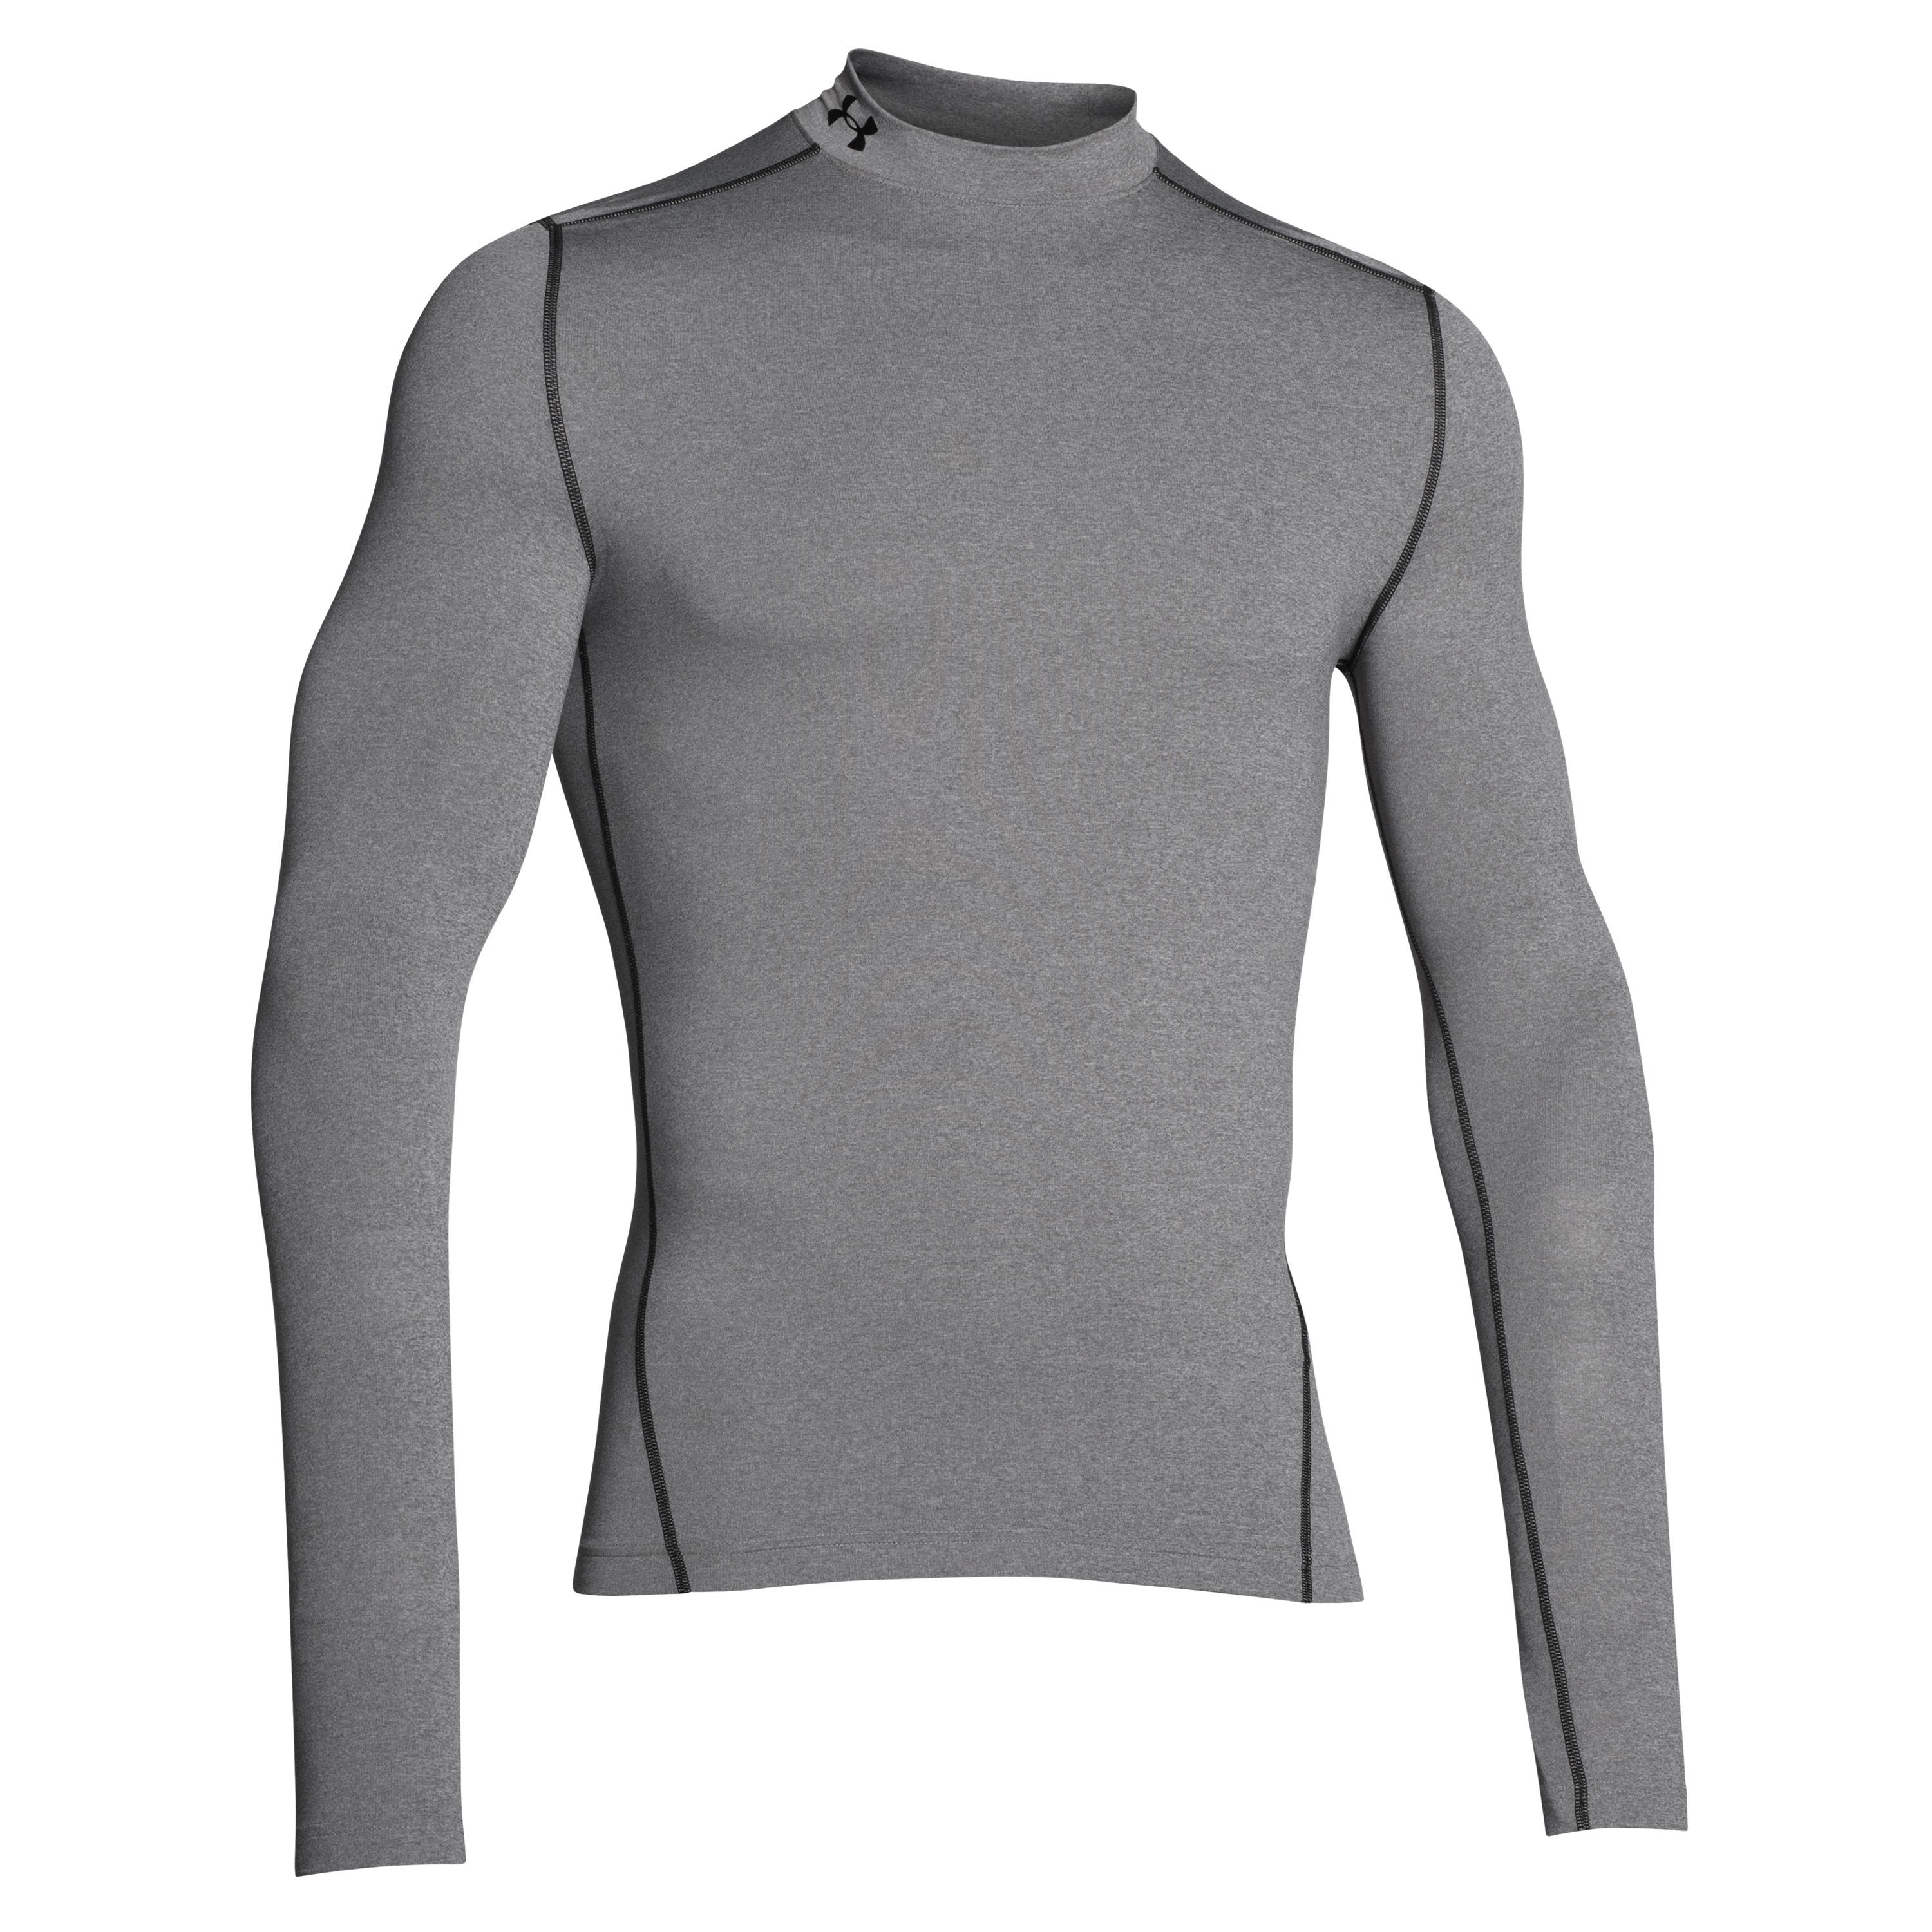 Download Under Armour Compression Mock Shirt ColdGear gray